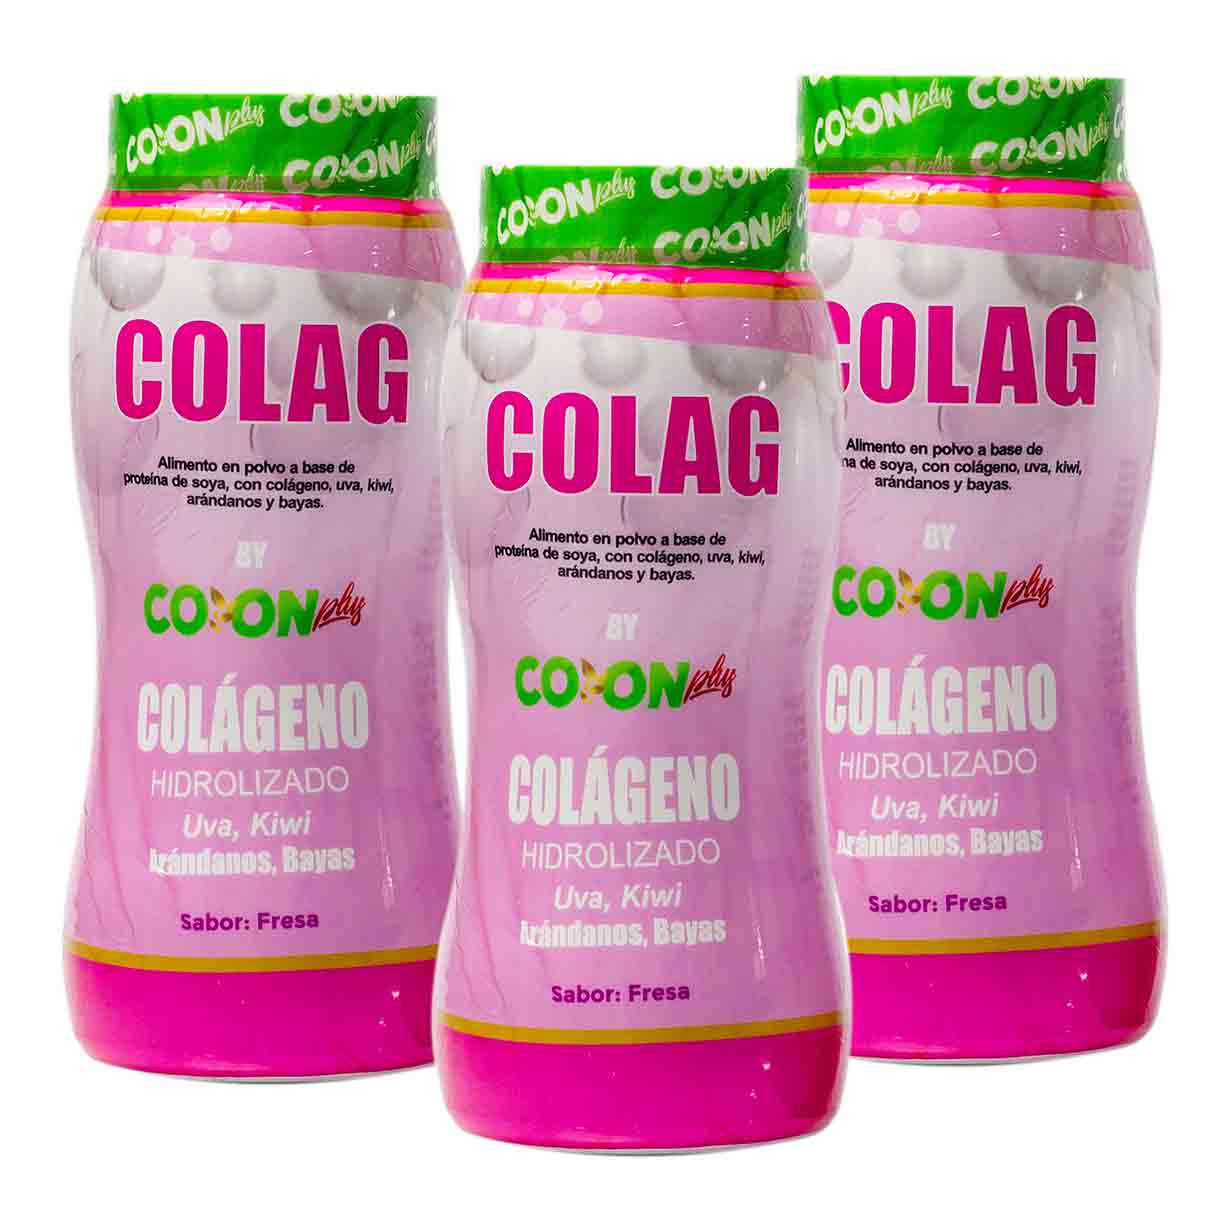 COLAG - Colágeno Hidrolizado